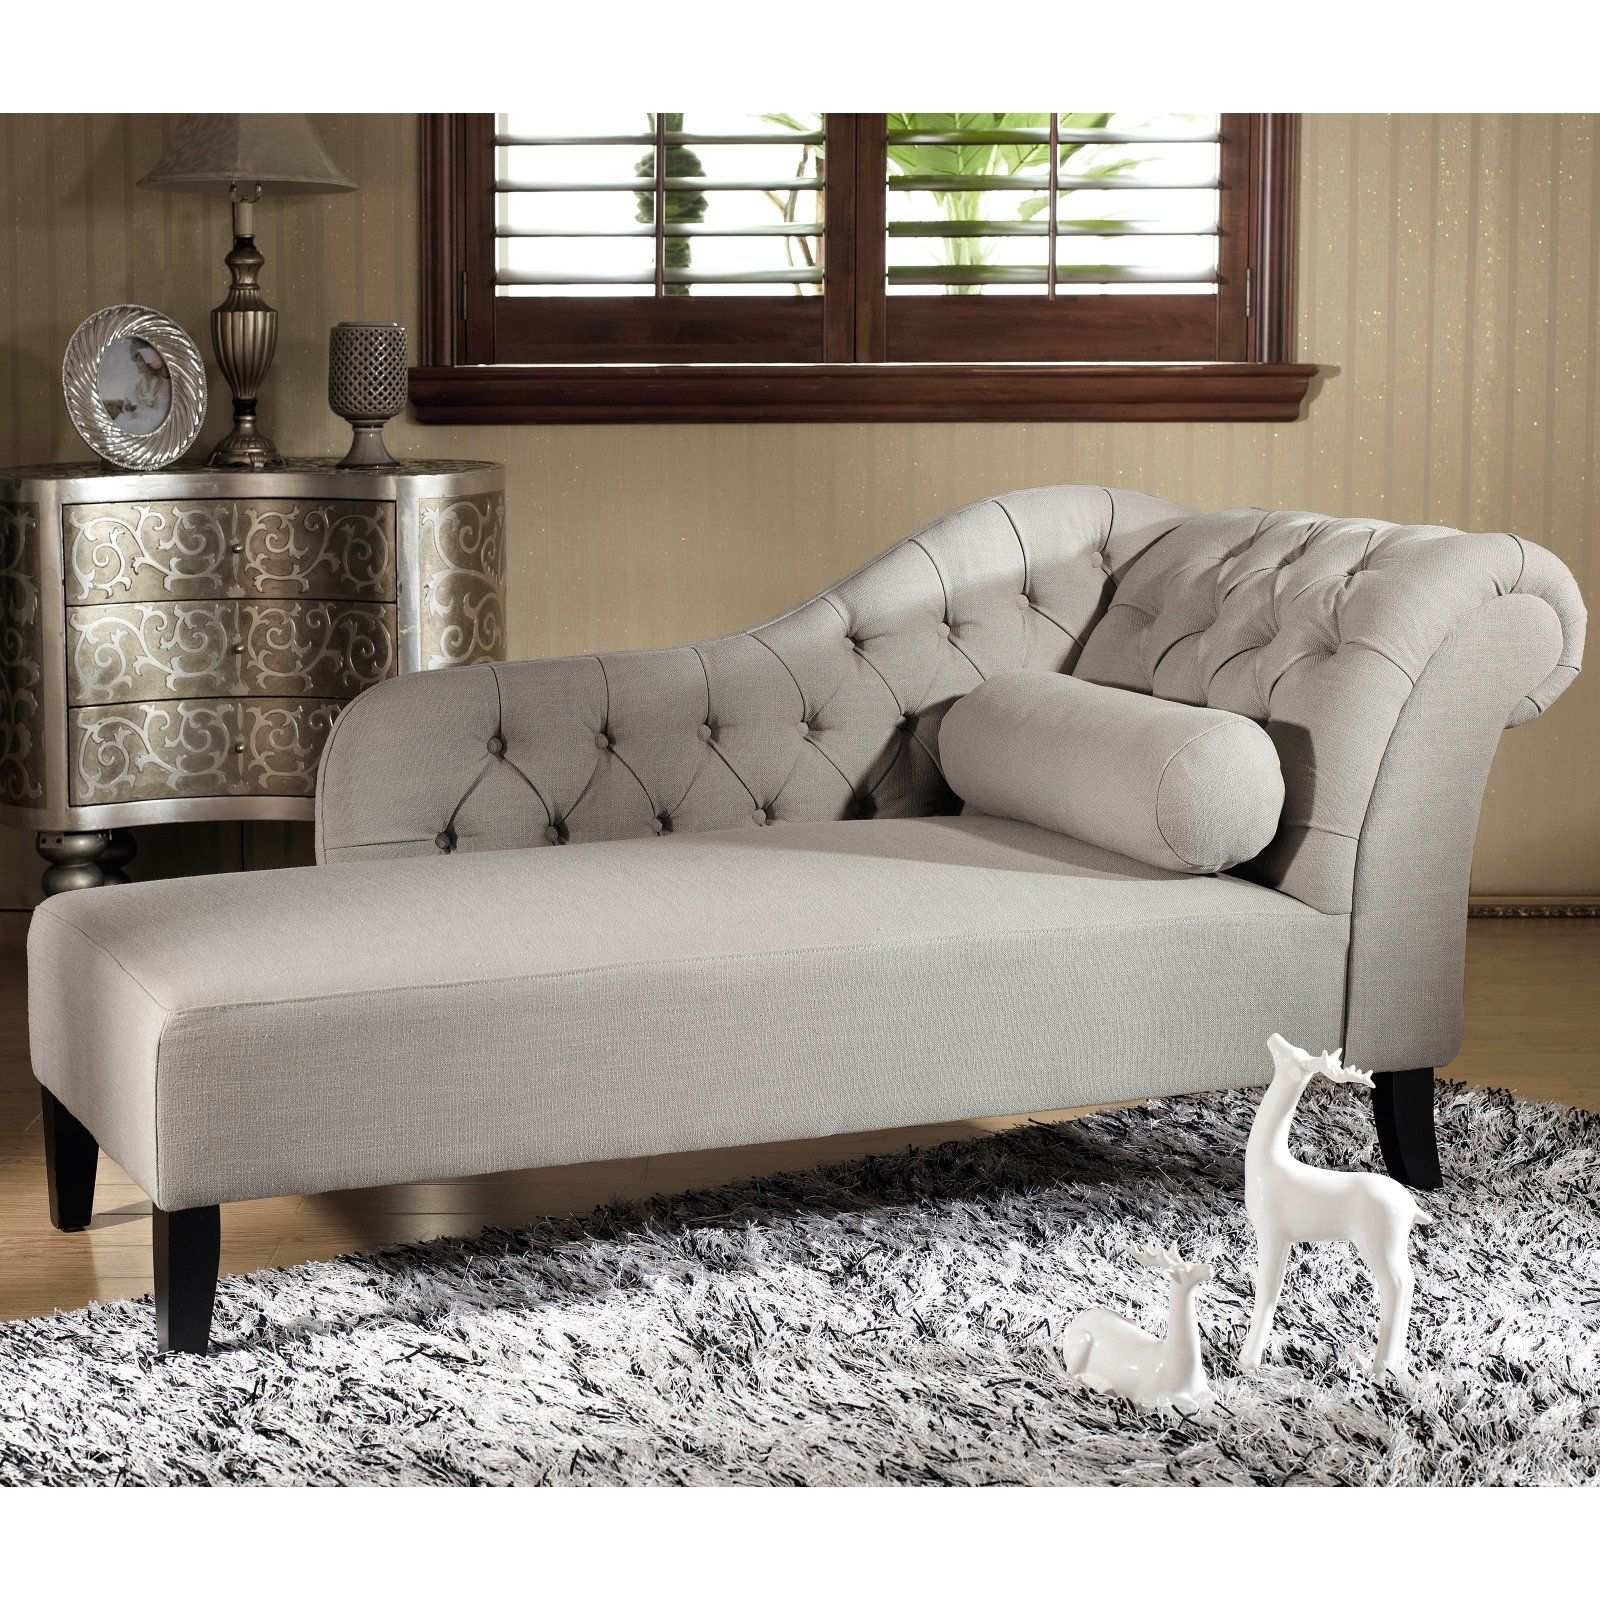 Baxton studio aphrodite tufted putty gray linen modern chaise lounge